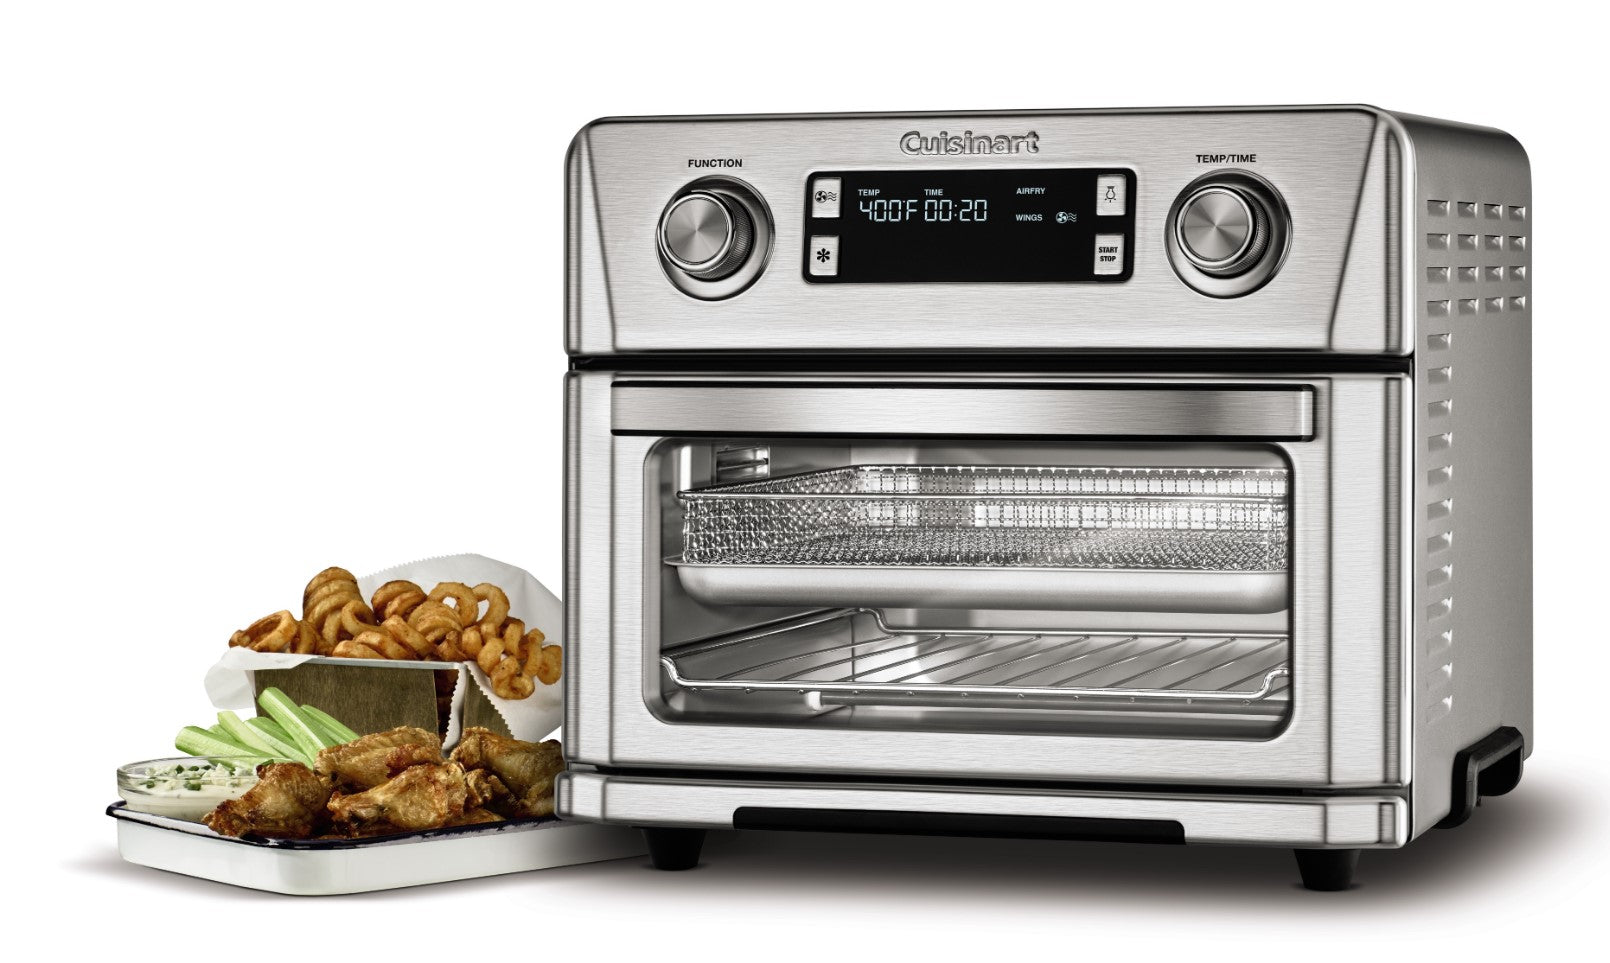 Cuisinart Digital Air Fryer Oven CTOA-130PC2FR - Certified Refurbished